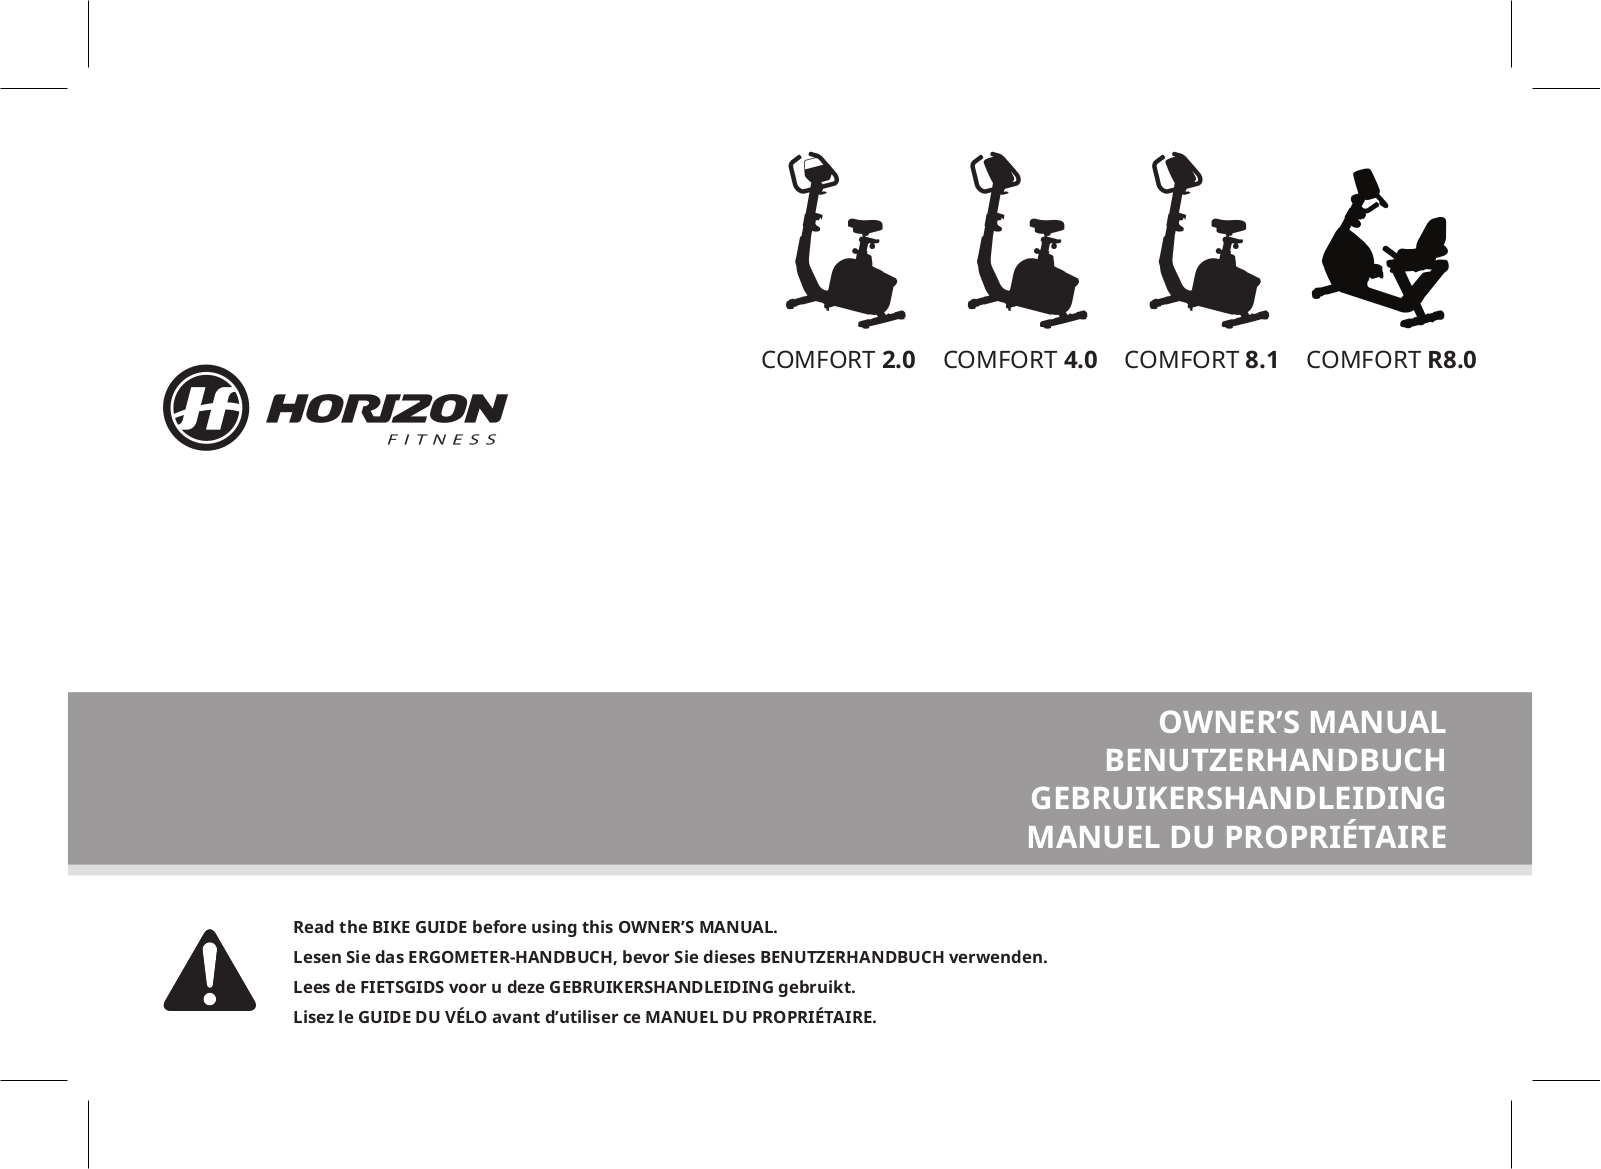 Horizon Fitness Comfort 2.0 operation manual